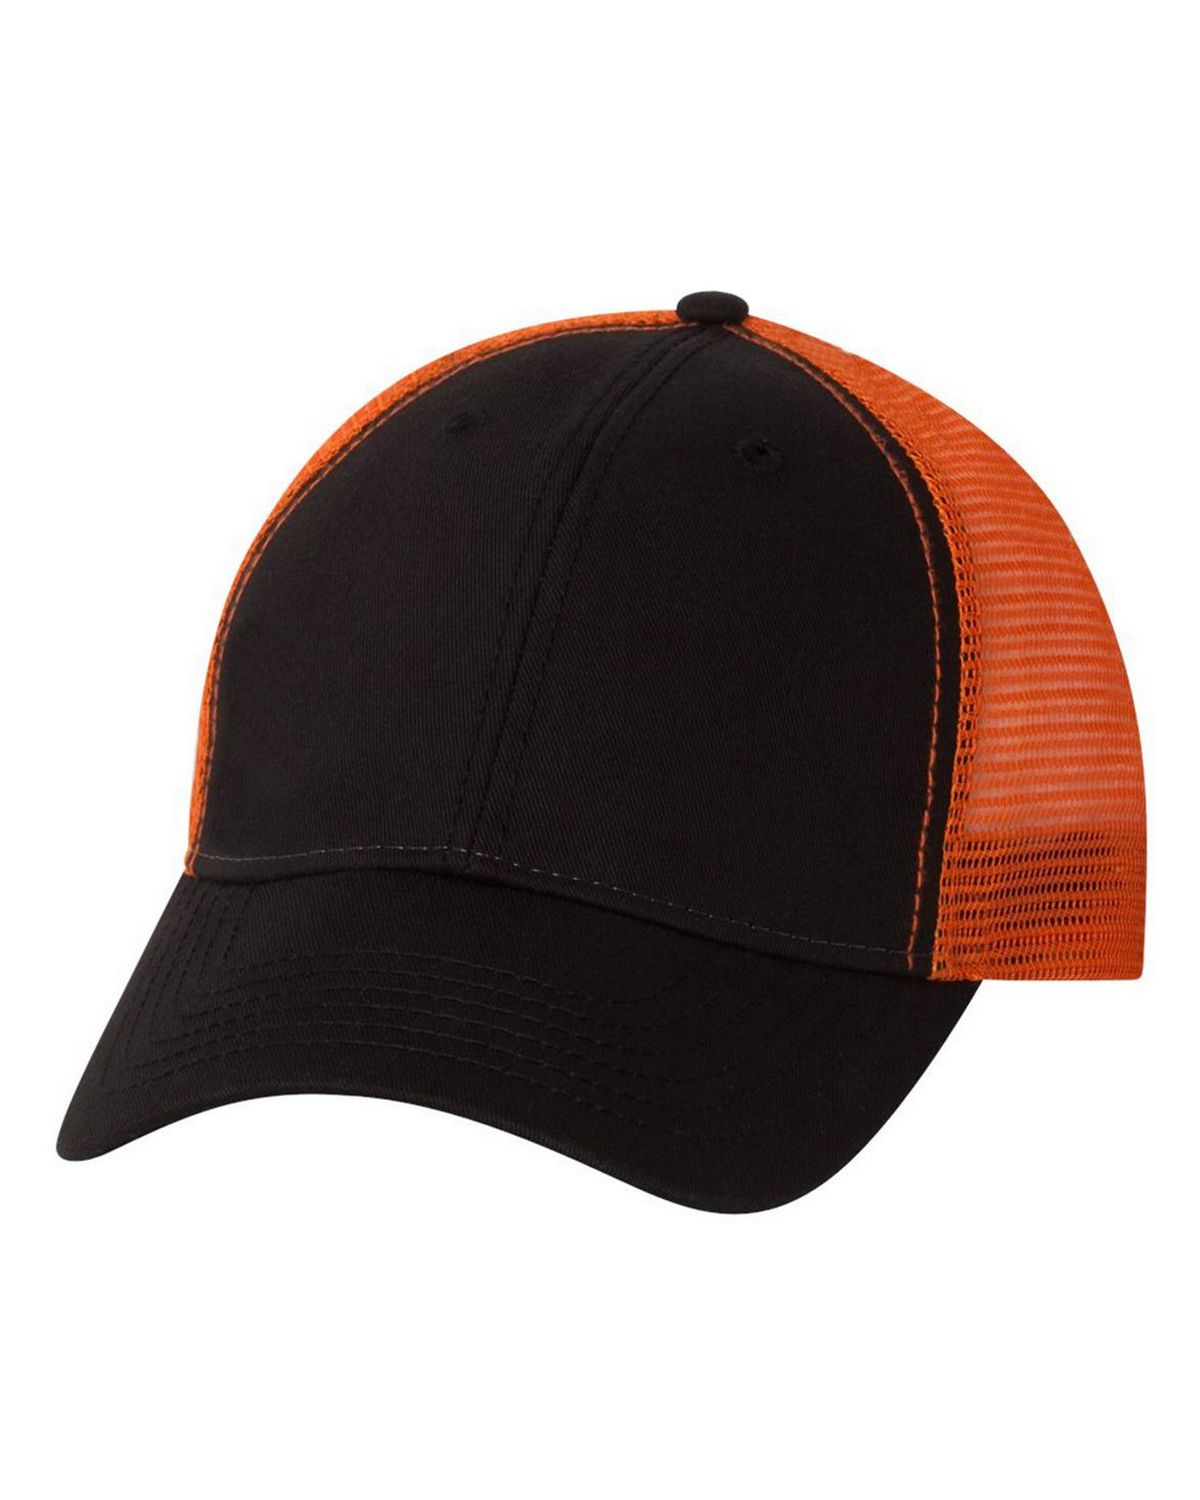 Buy Trucker Mesh Caps for Men and Women | ApparelnBags.com